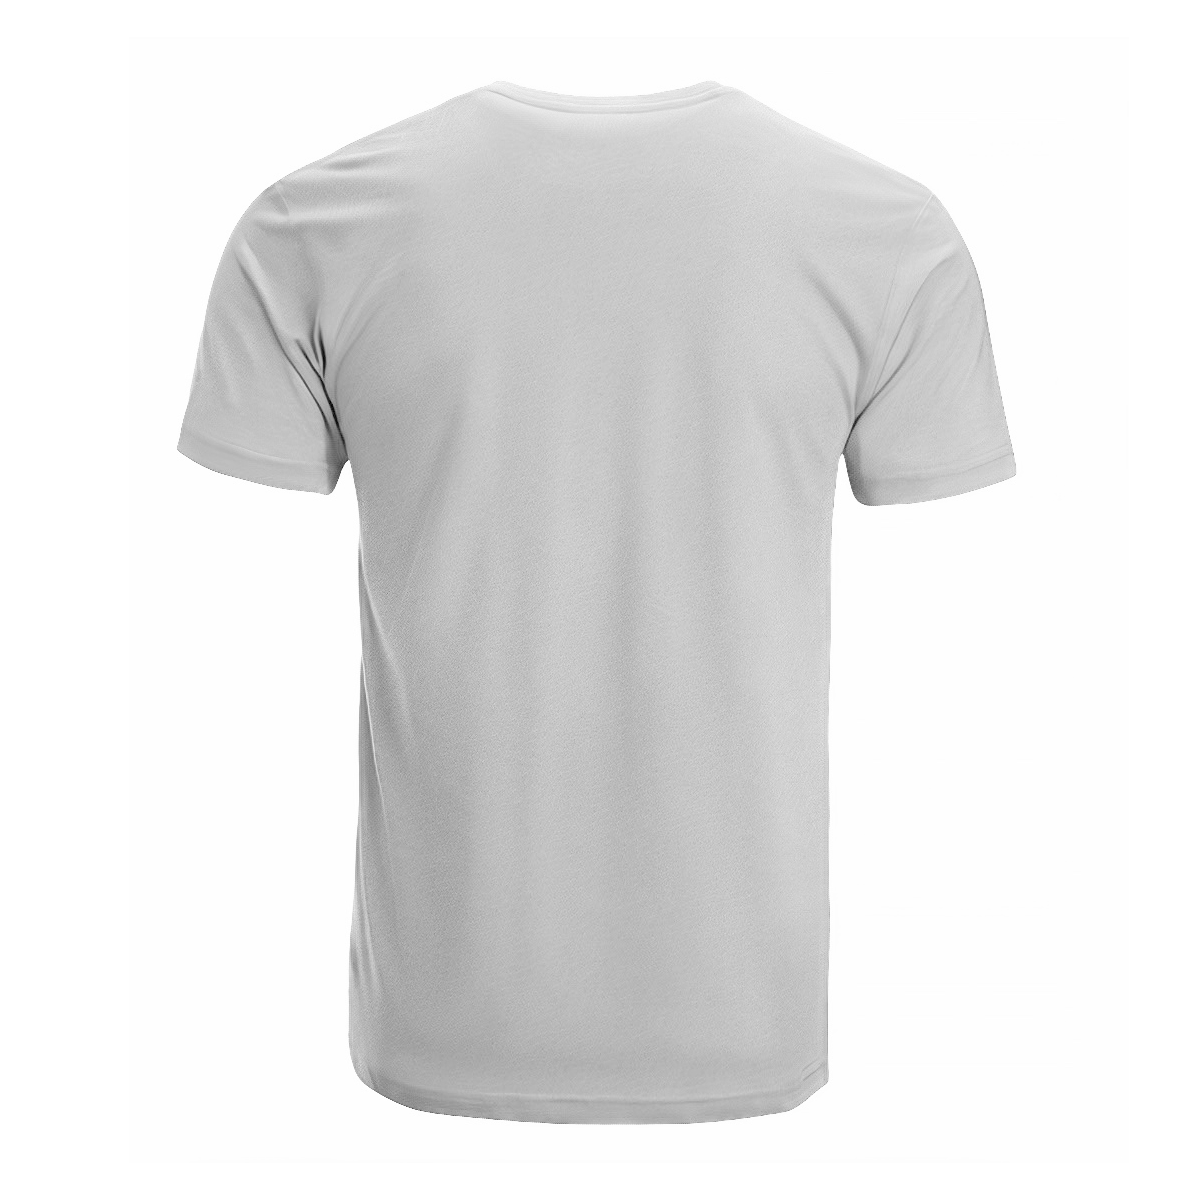 Guthrie Tartan Crest T-shirt - I'm not yelling style